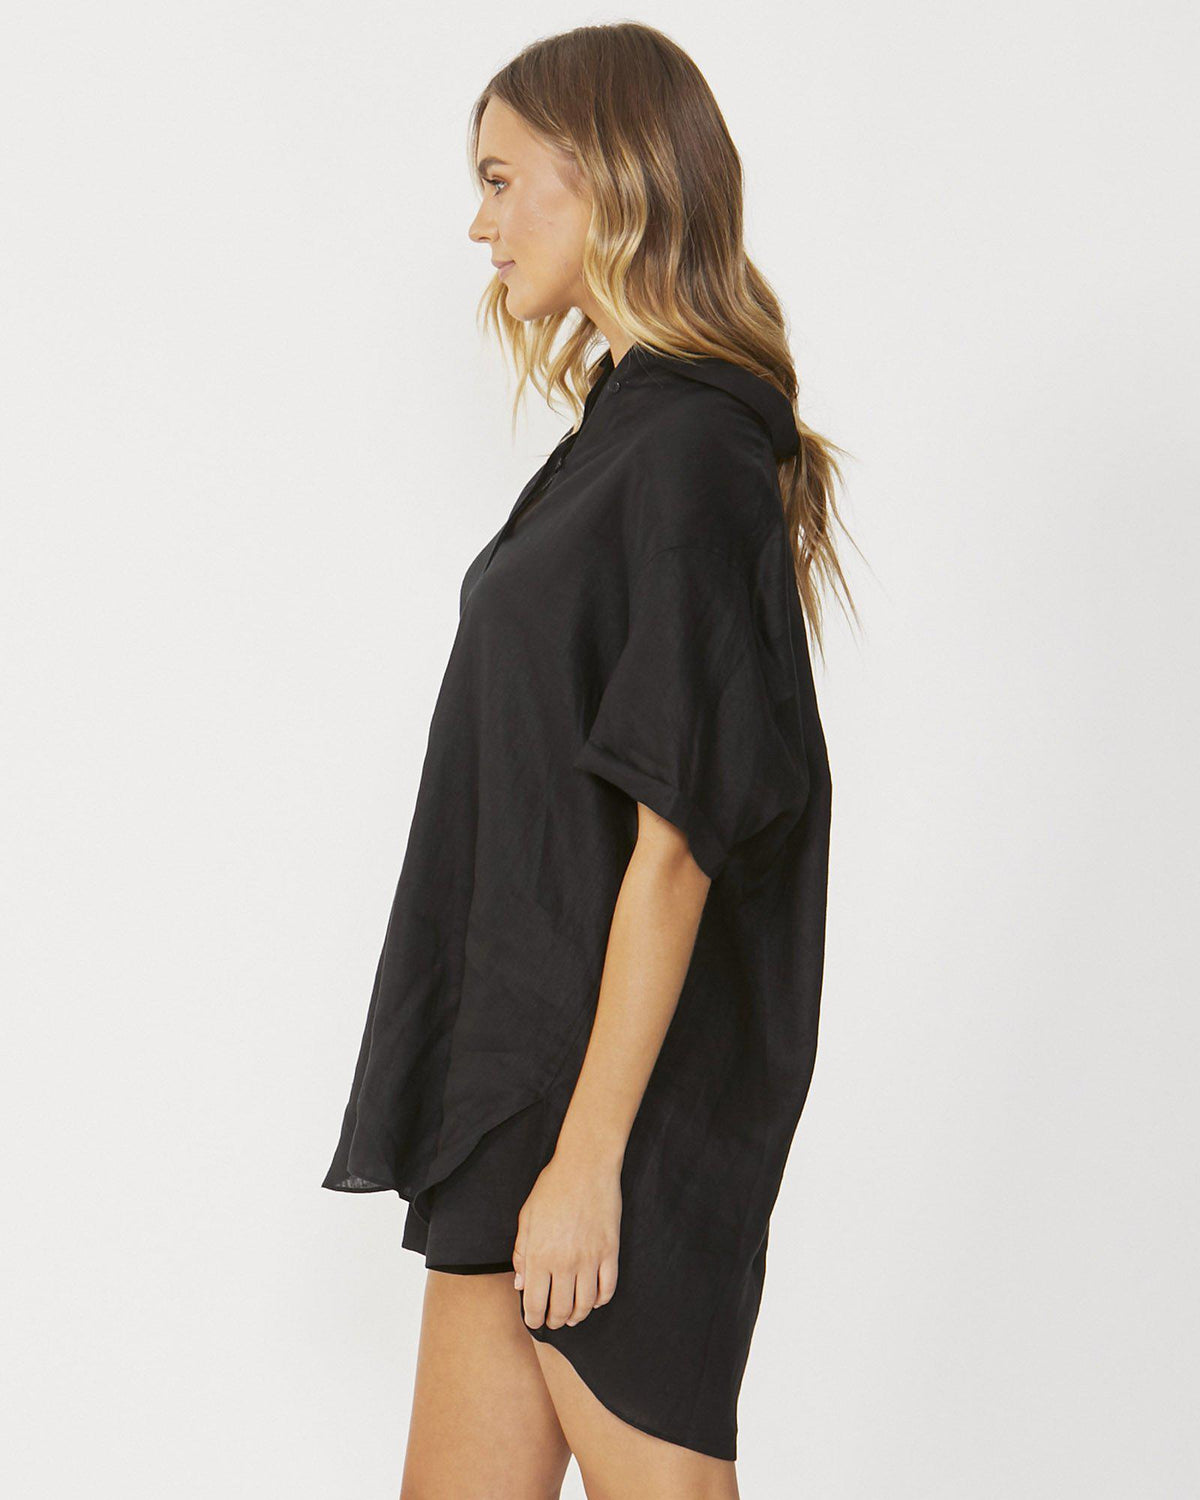 Eadie Shirt - Black - Sass - FUDGE Gifts Home Lifestyle